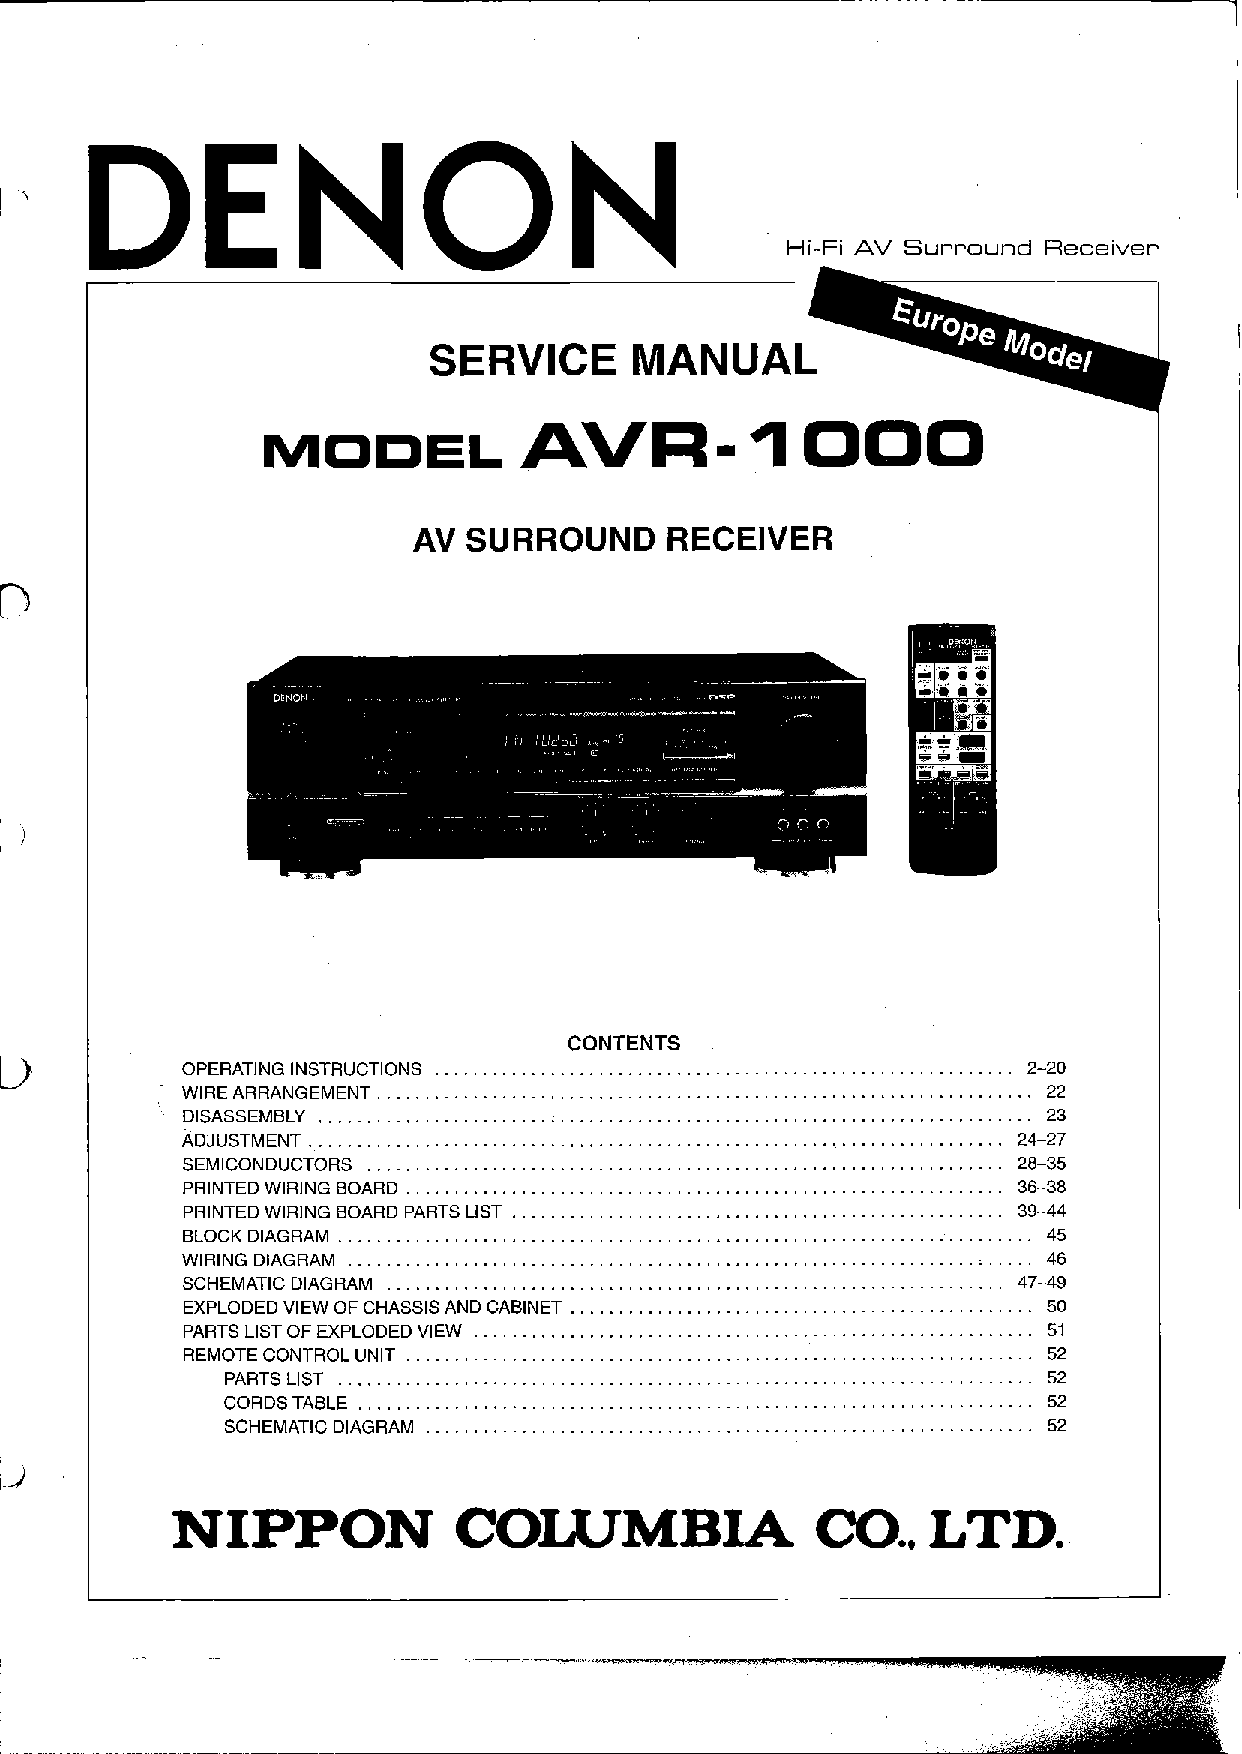 Service Manual-Anleitung für Denon AVR-1000 